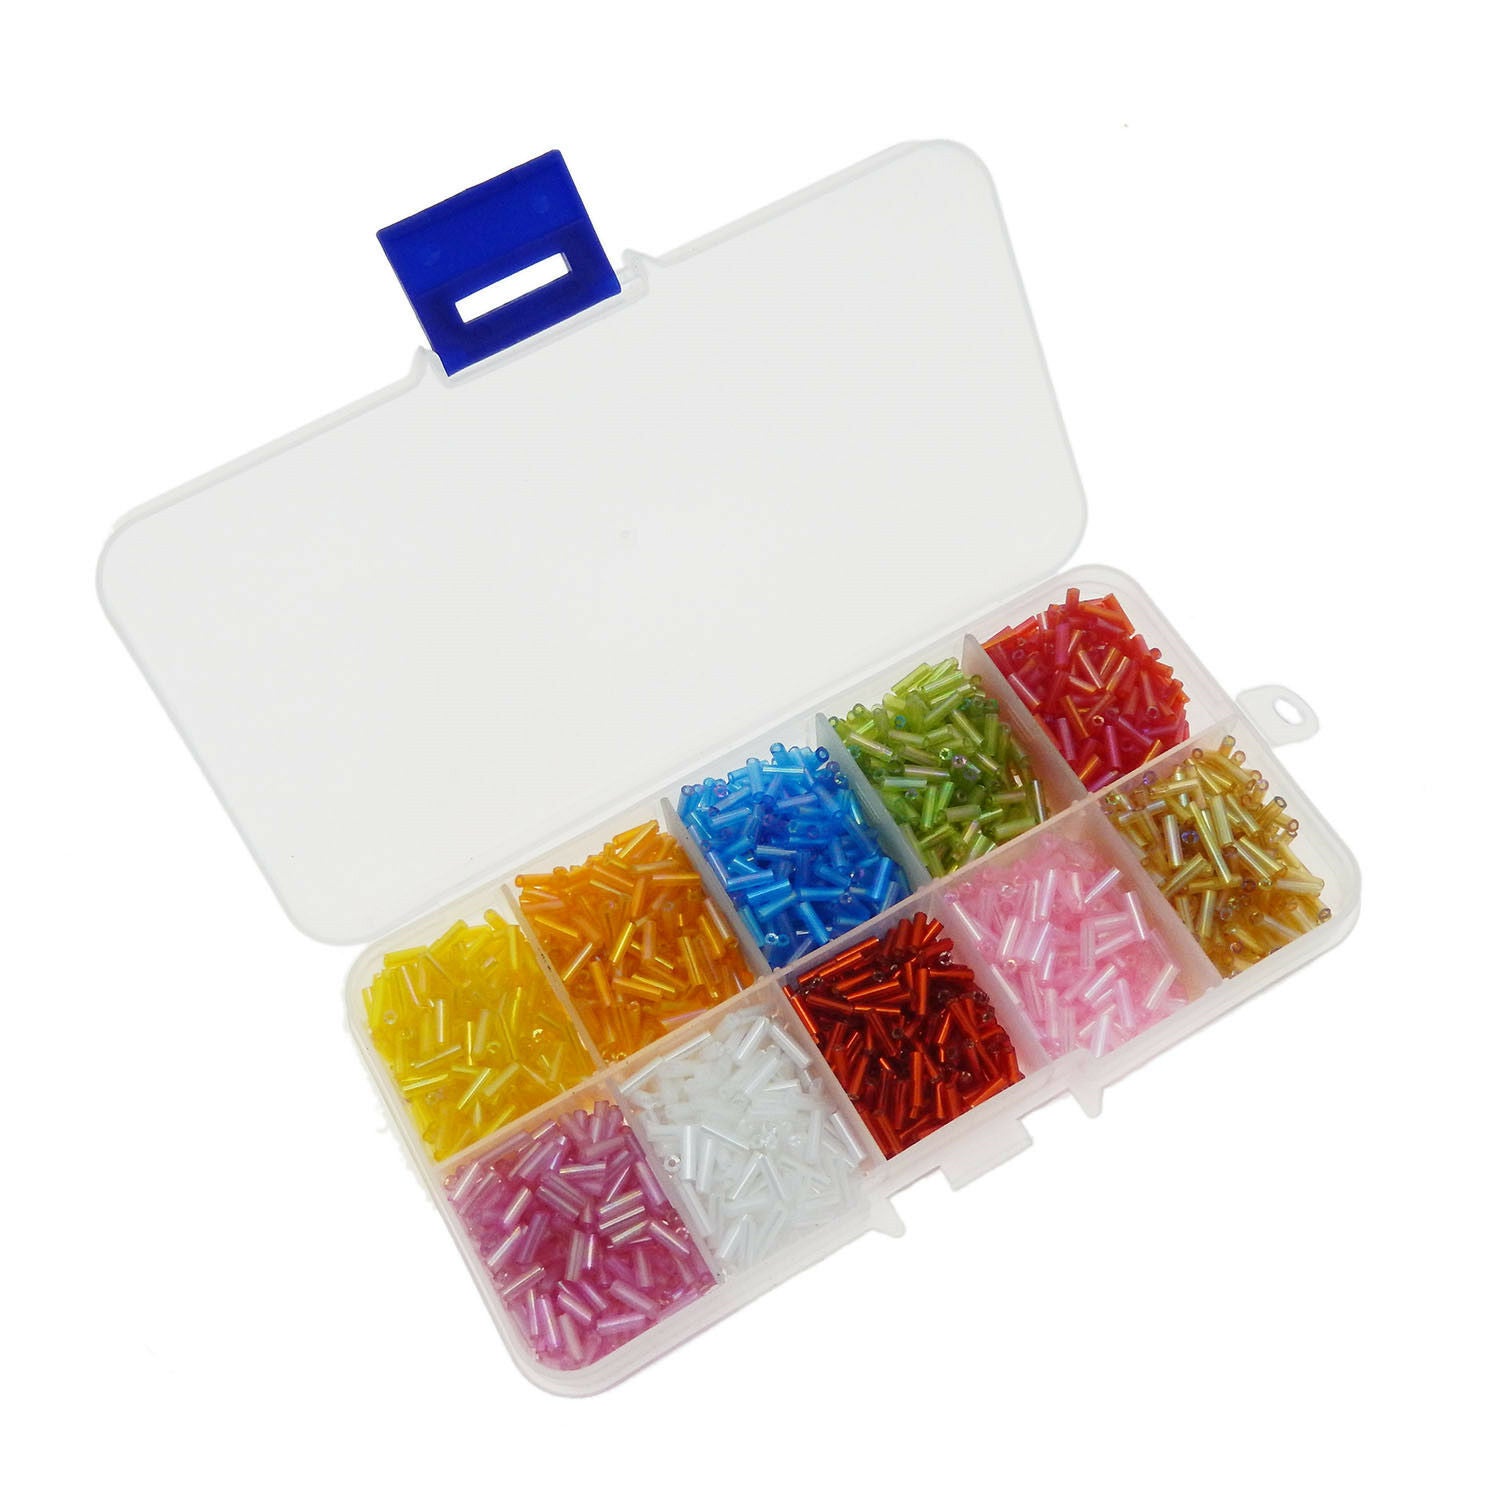 1 Box Approx 3000 pcs Glass Bugle Tube Beads DIY Jewelry Craft Accessories